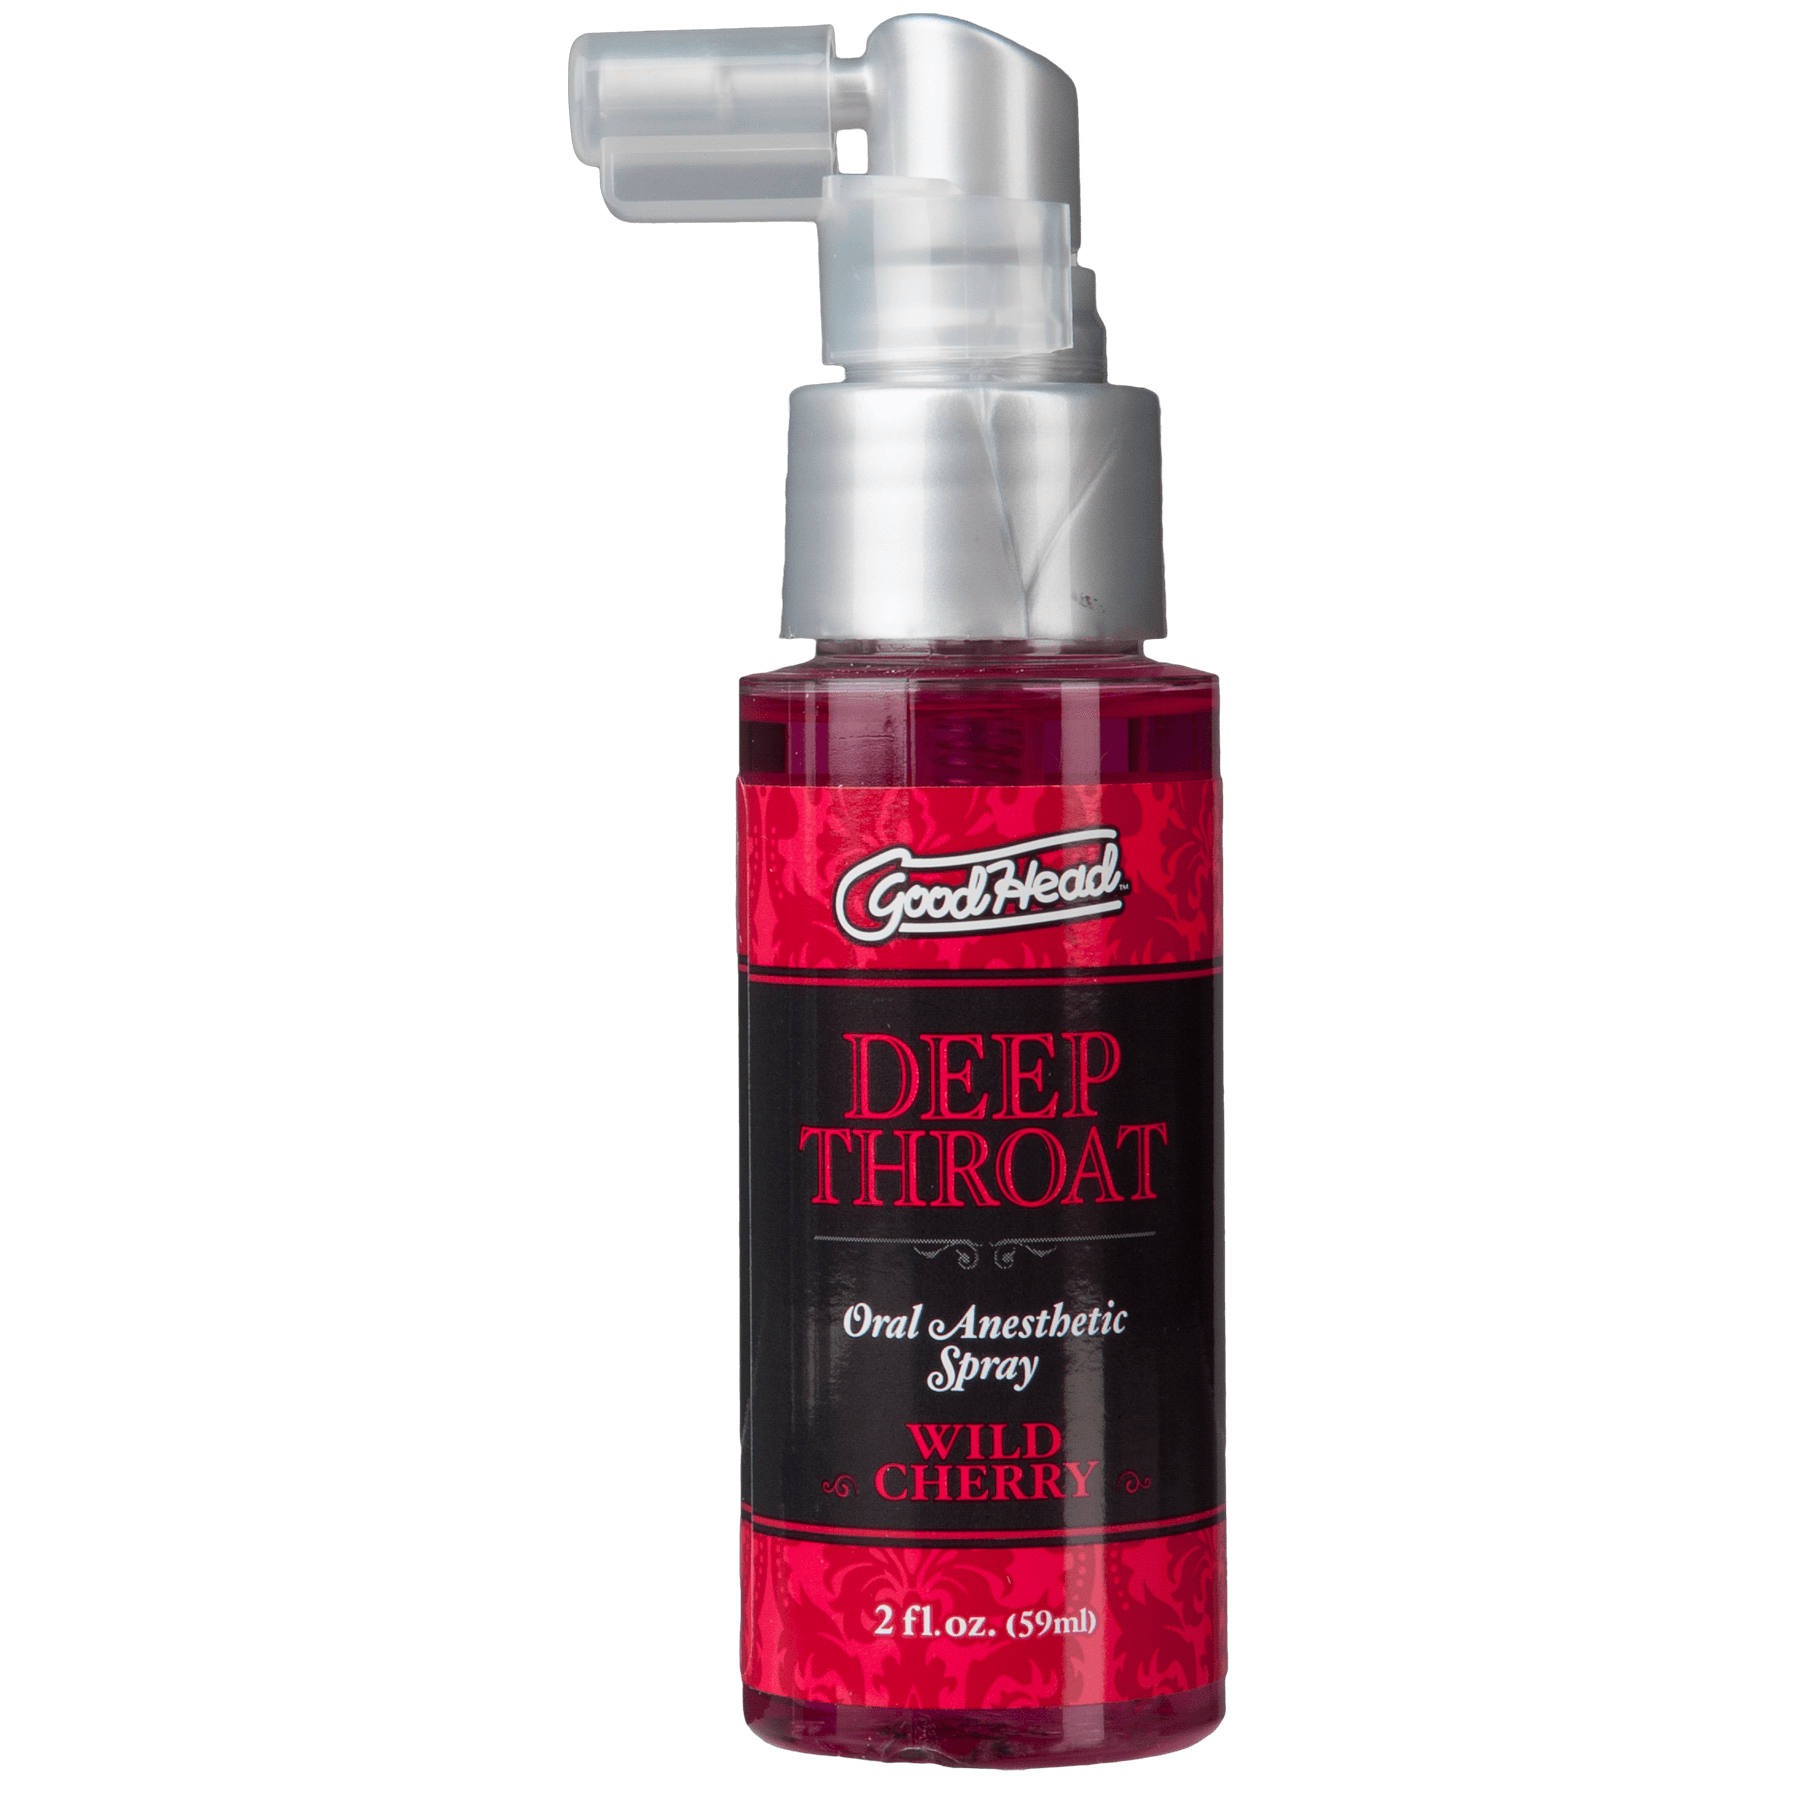 Doc Johnson® Good Head Deep Throat Spray Cherry - Rolik®